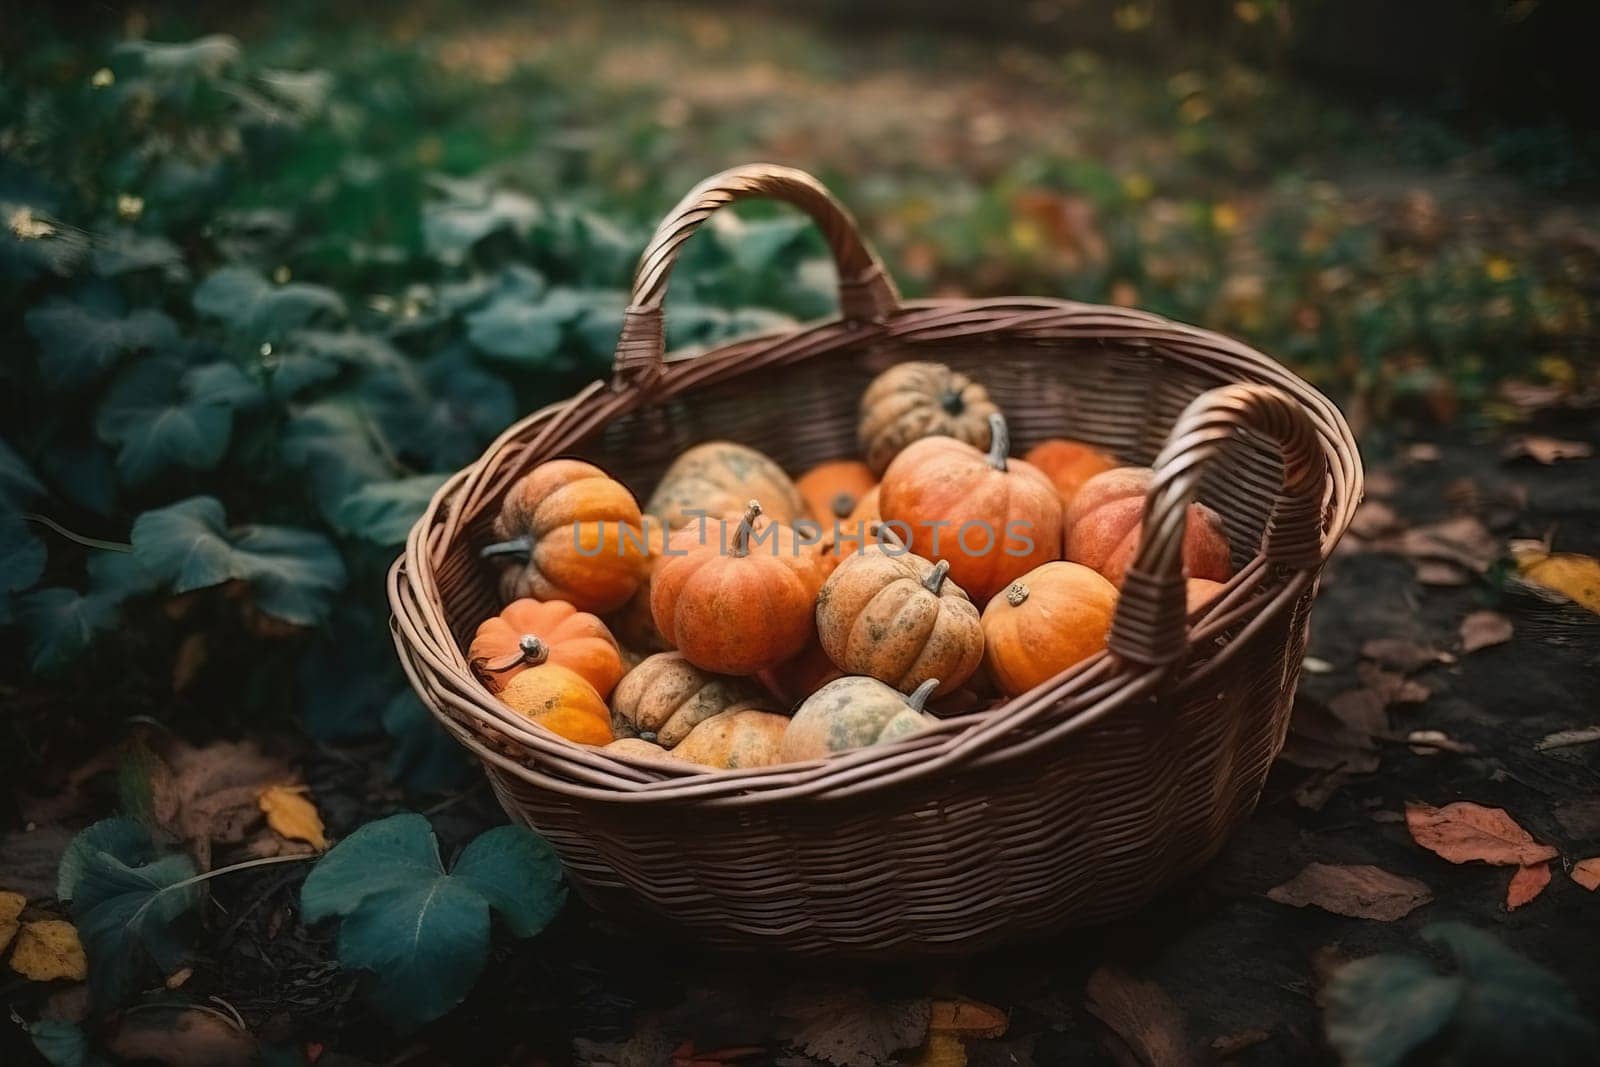 Close-Up View Of A Basket Of Pumpkins by GekaSkr